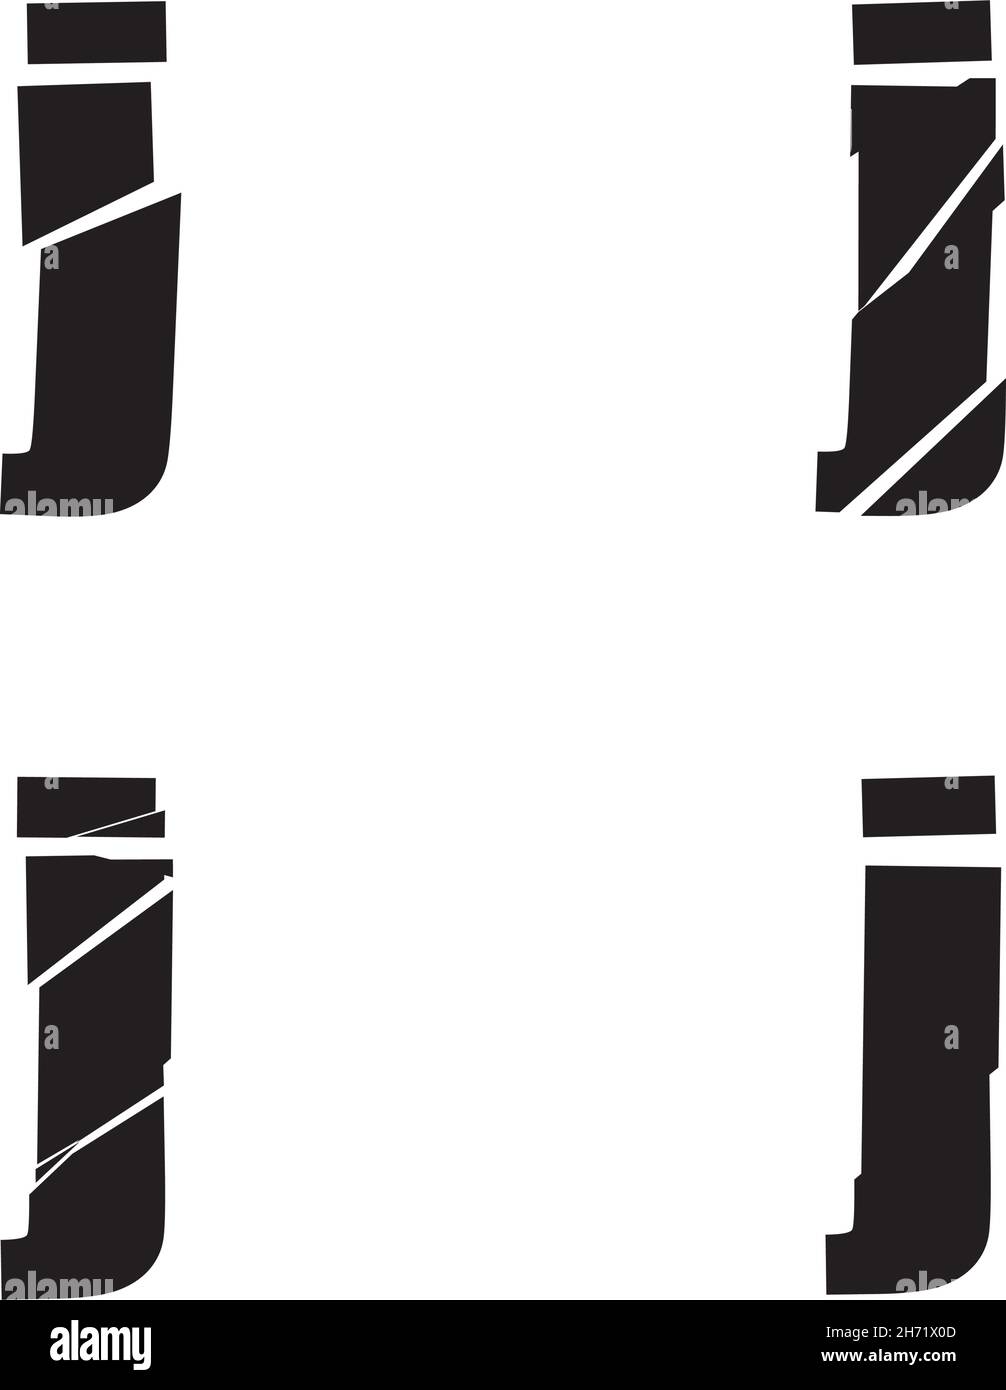 Textured letter J. Shattered, fractured, broken alphabet series - stock vector illustration, clip-art graphics Stock Vector